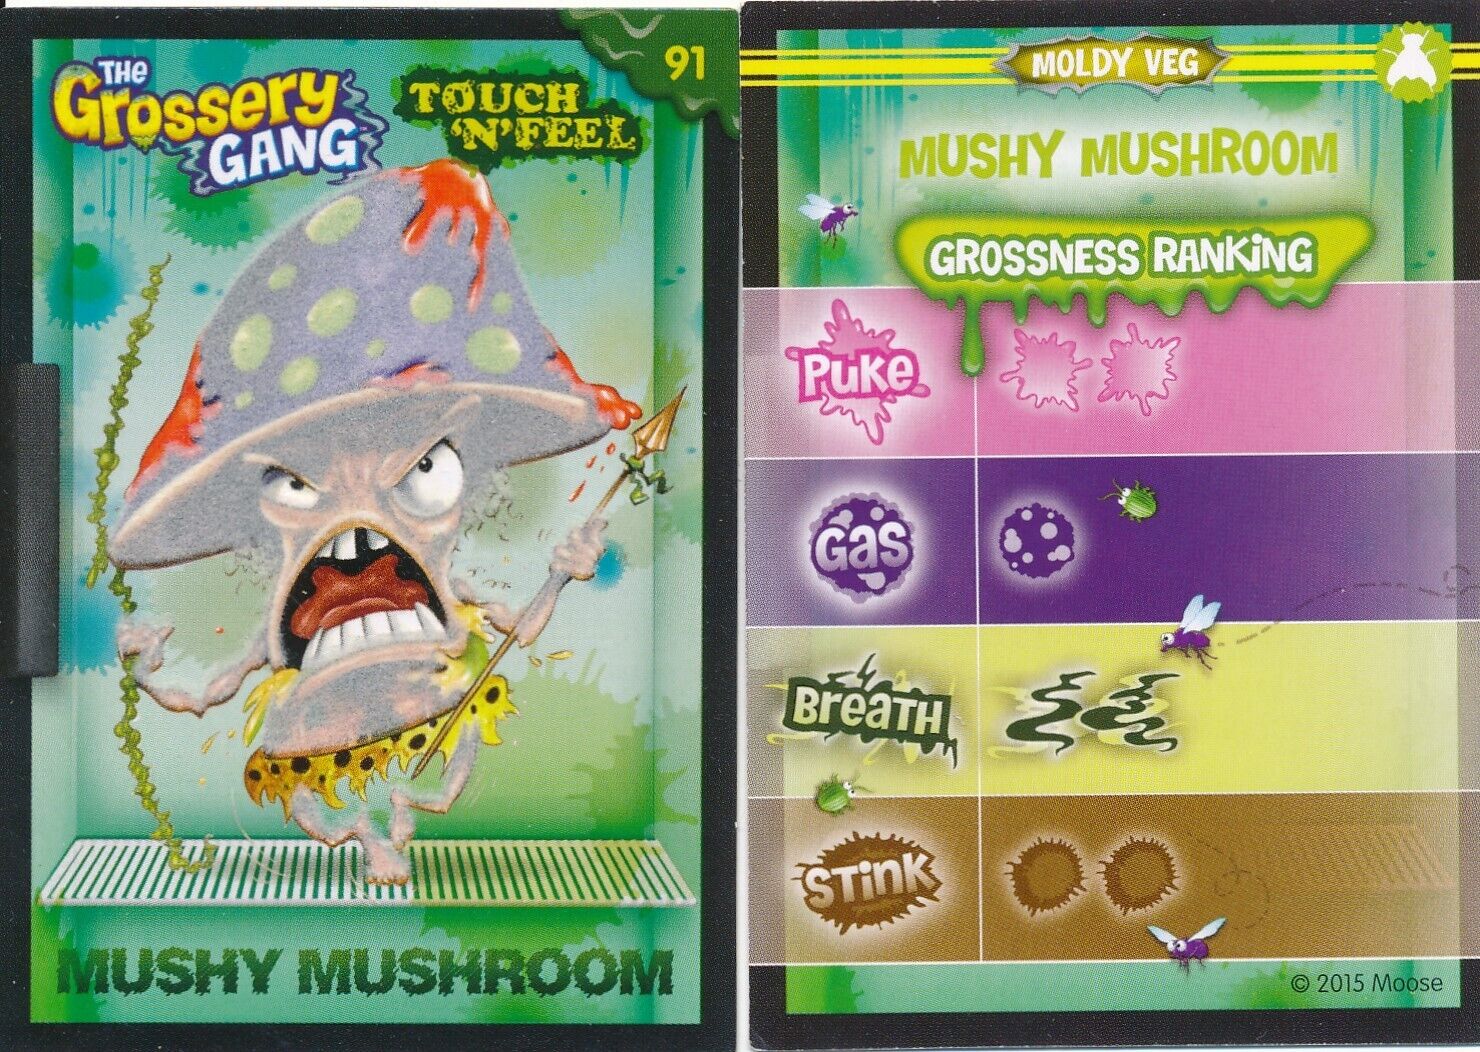 2015 The Grossery Gang Collector Cards Touch N Feel Mushy Mushroom #91 A1563